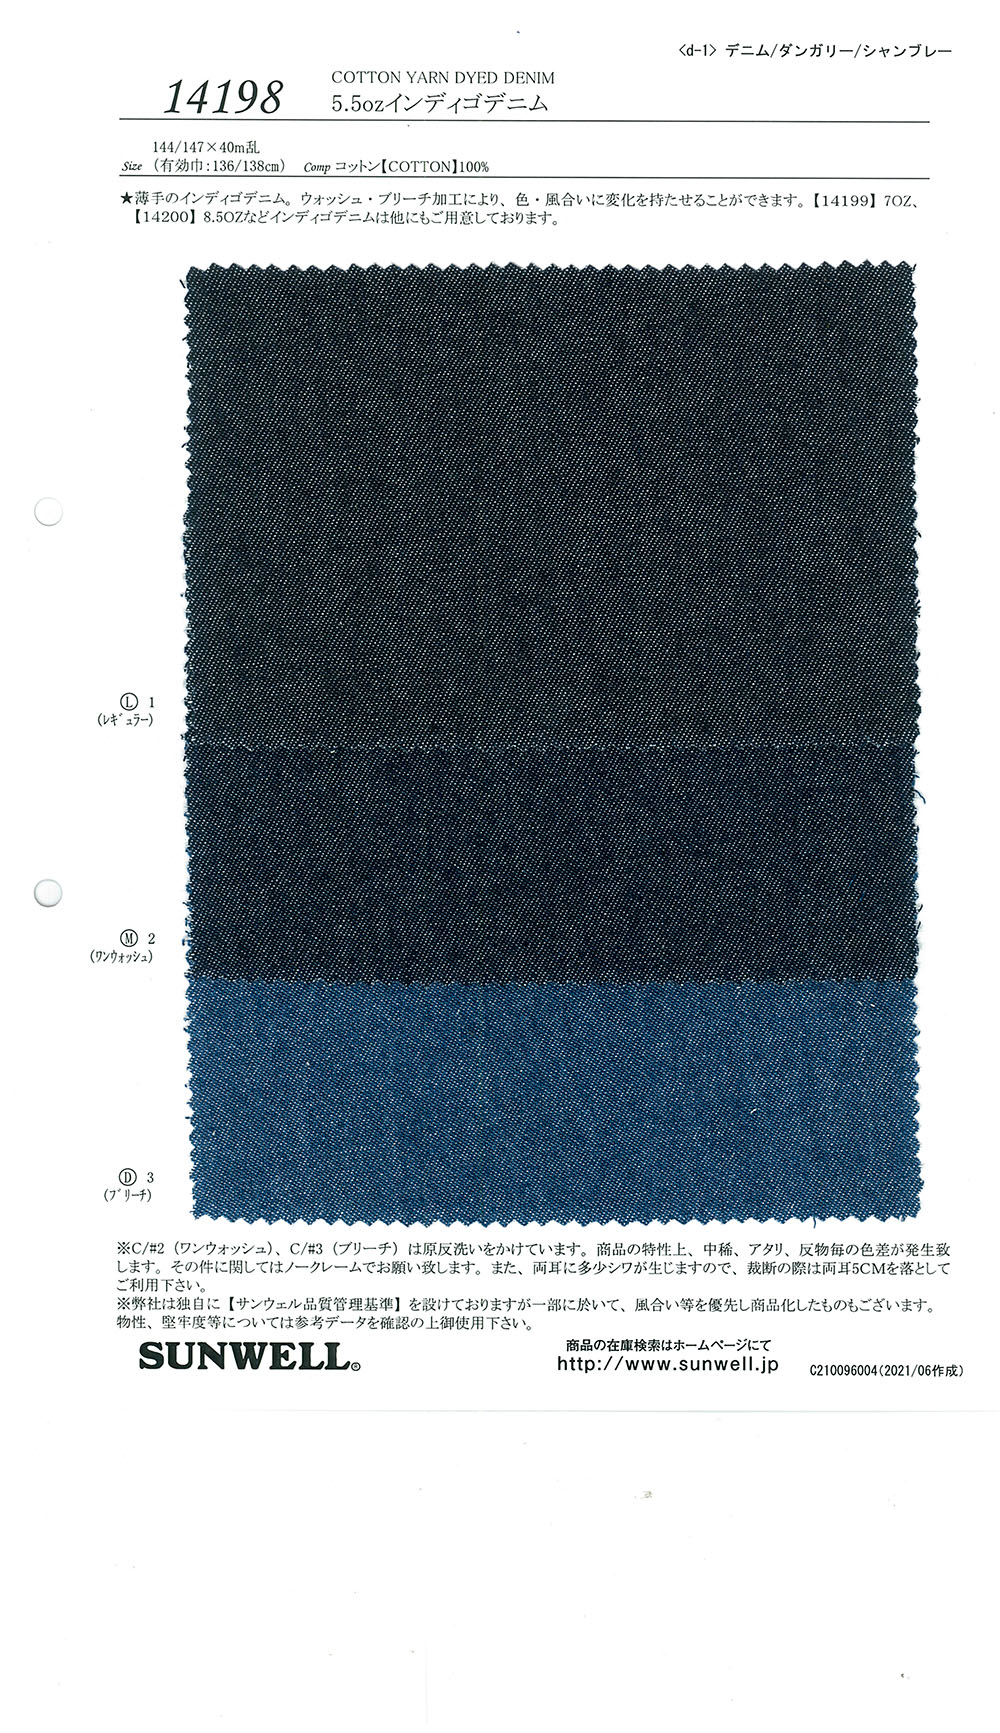 14198 Denim Indigo 5,5 Oz[Fabrication De Textile] SUNWELL